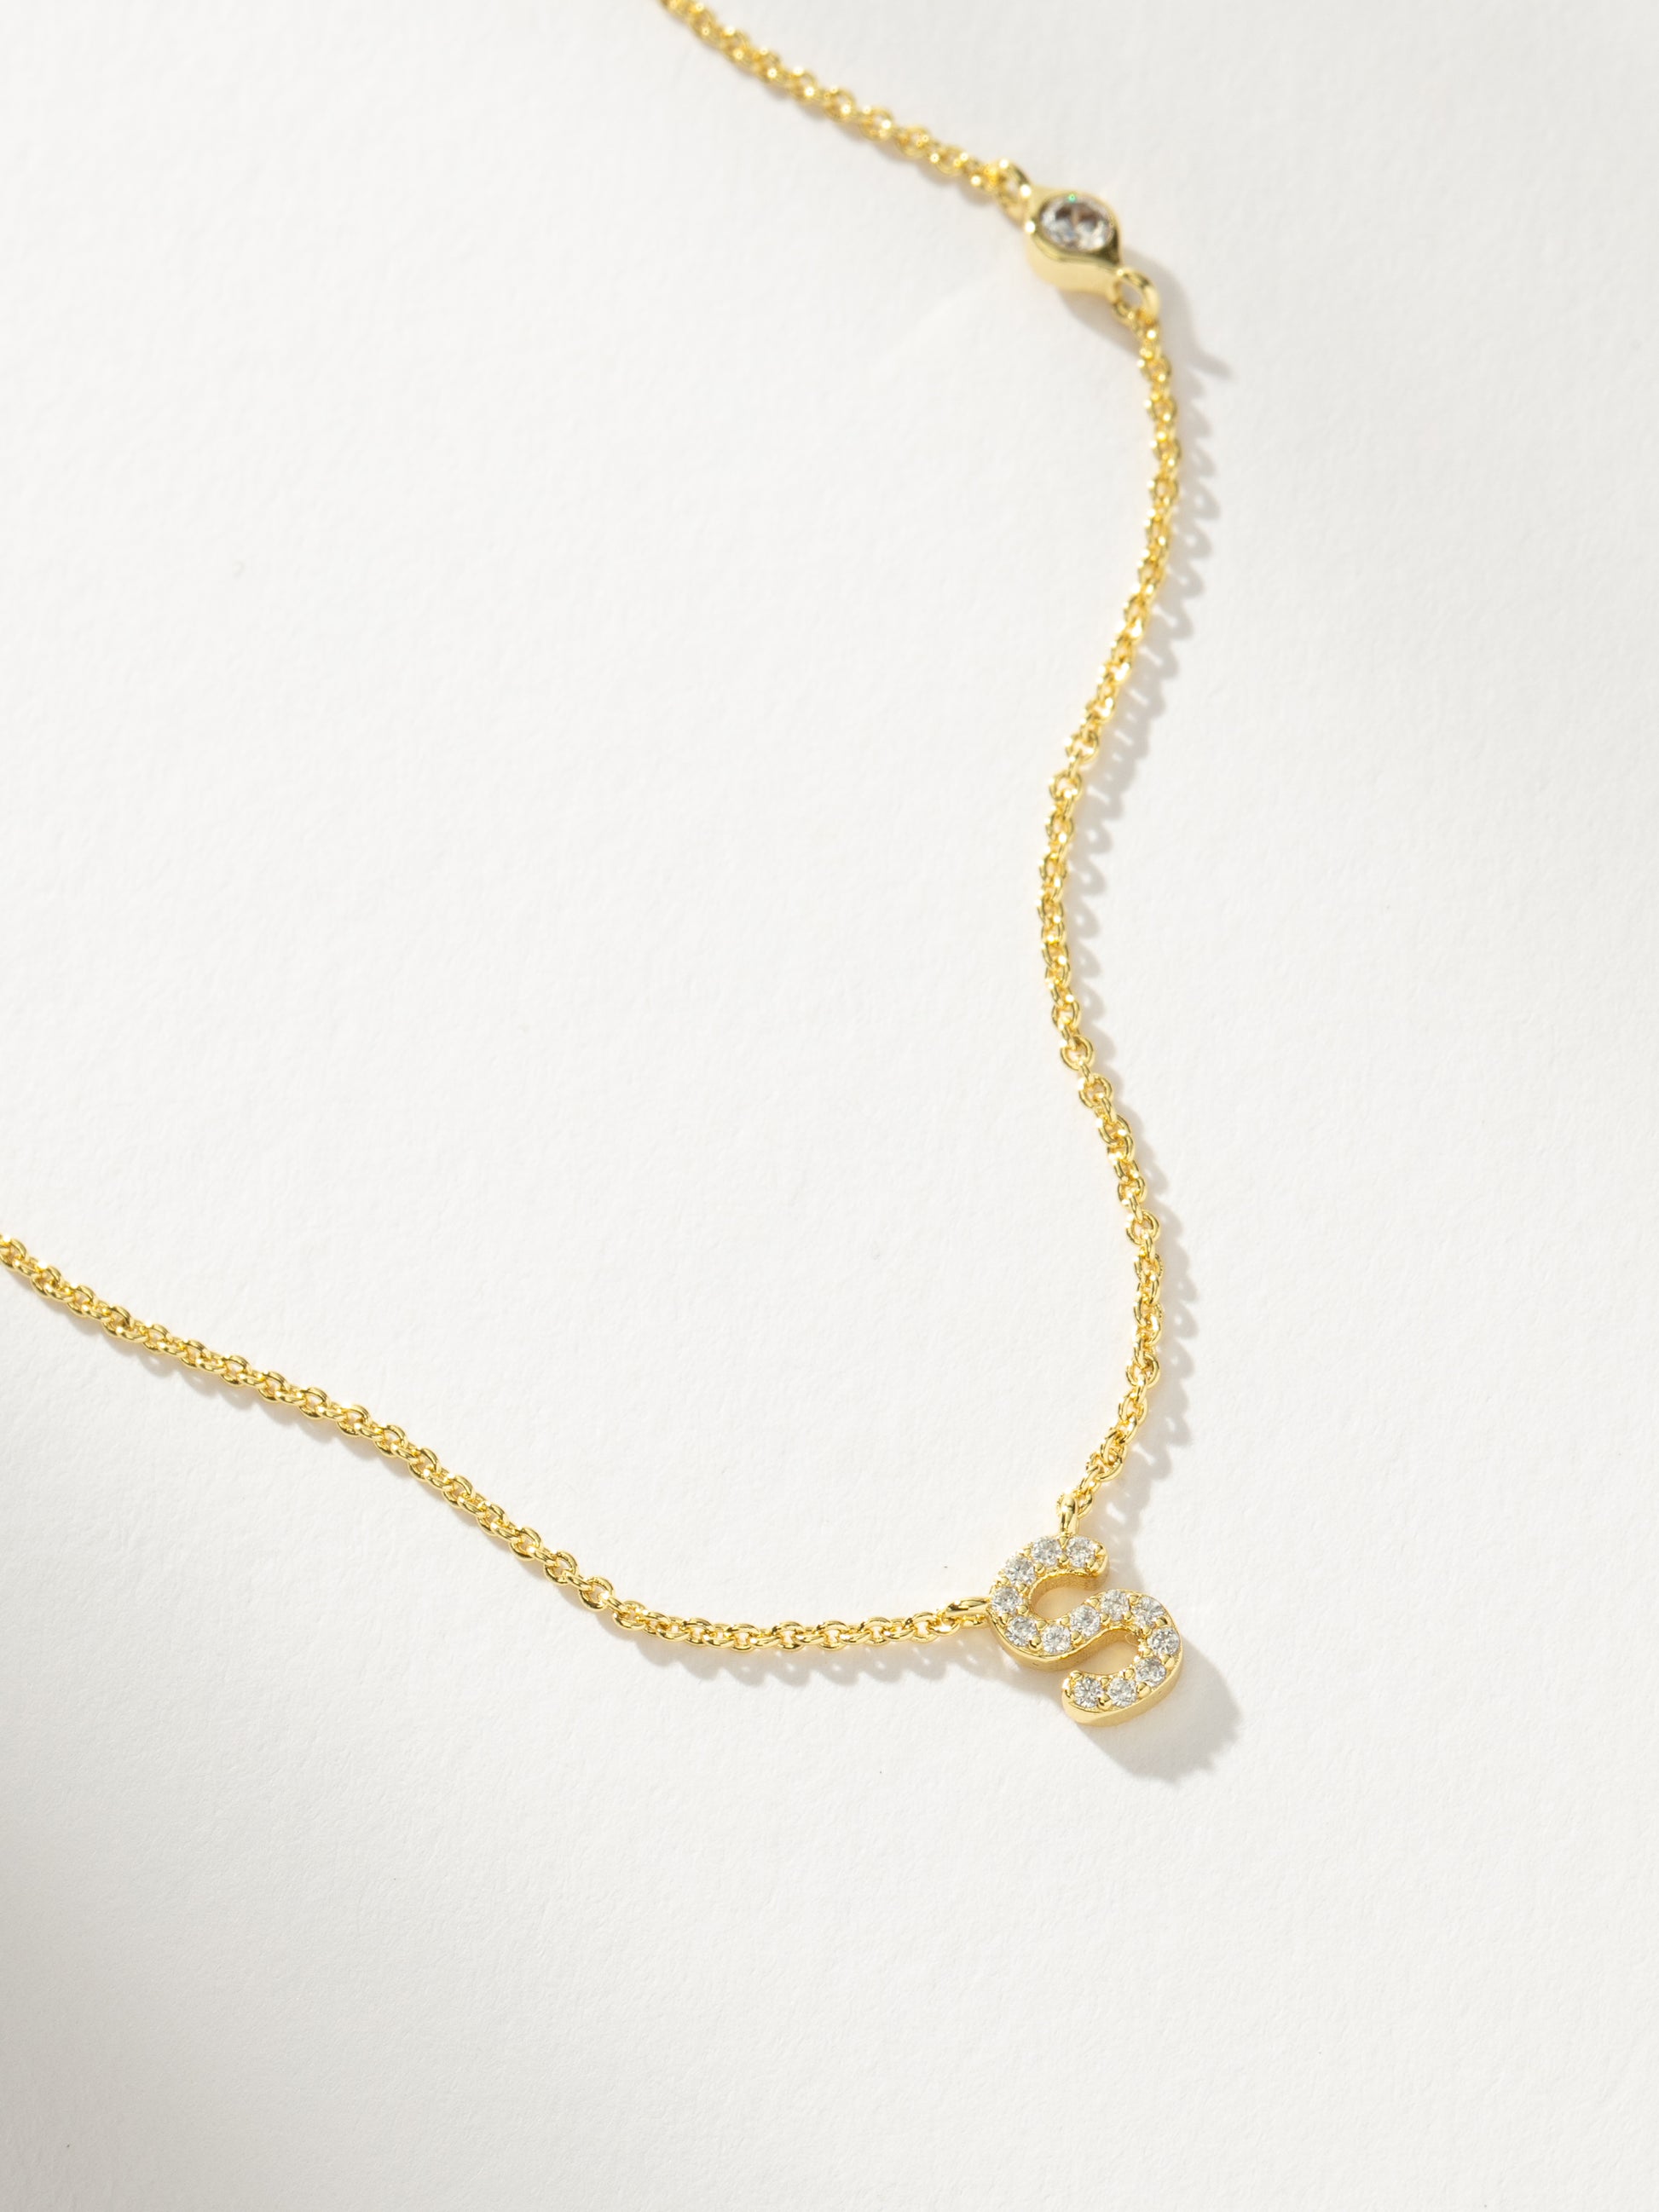 Pavé Initial Necklace | Gold S | Product Detail Image | Uncommon James